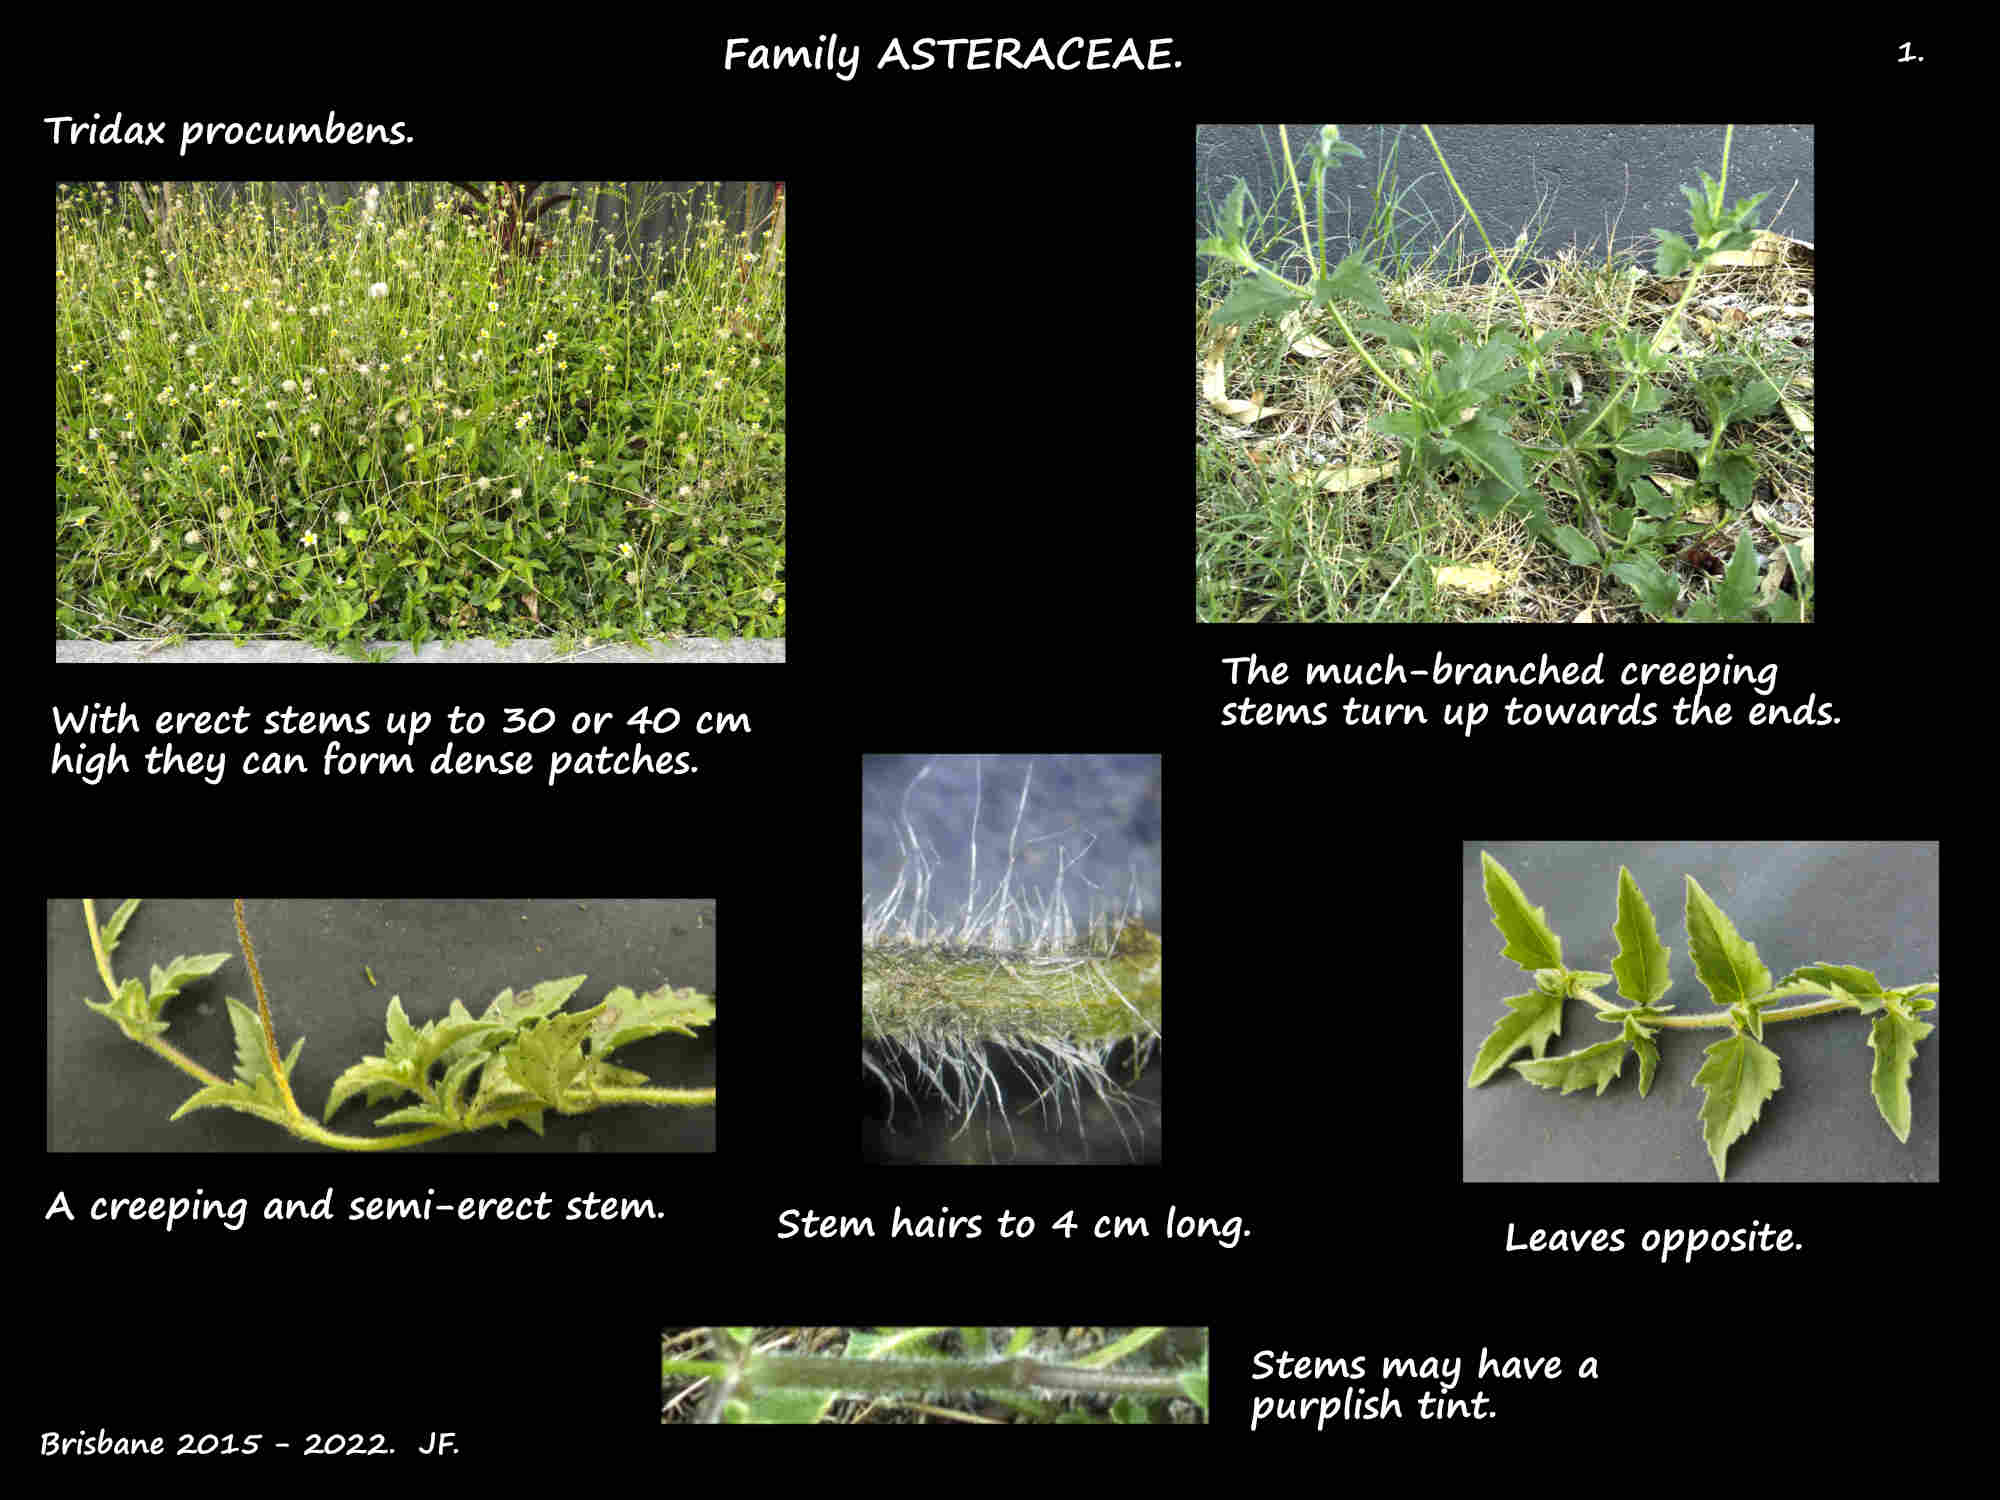 1 Tridax procumbens plants & stems